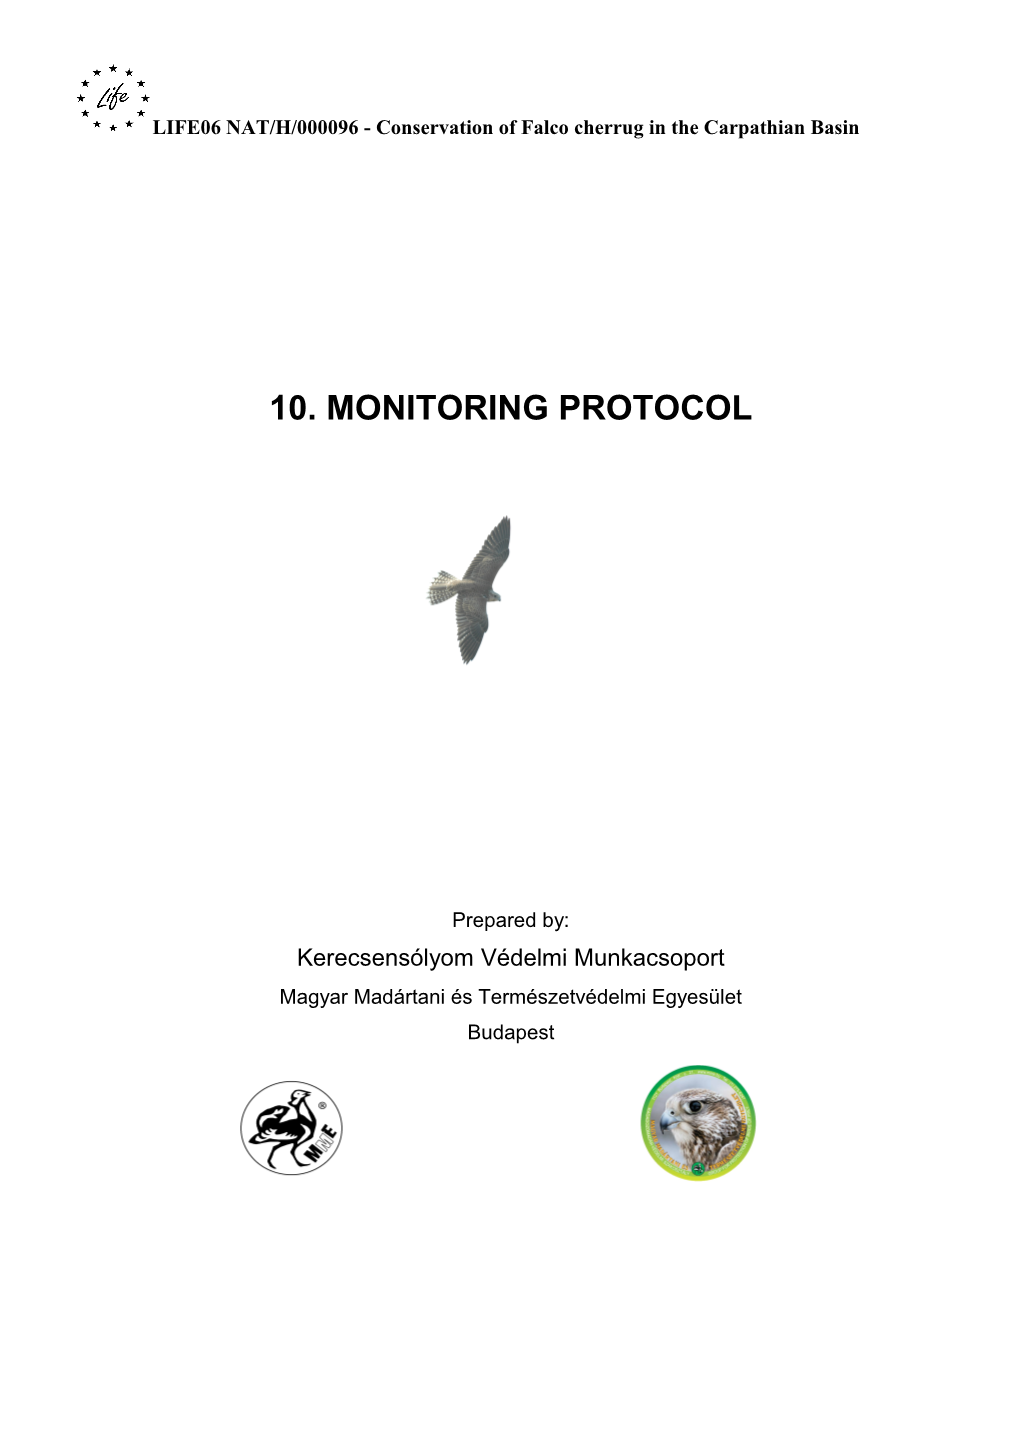 10. Monitoring Protocol